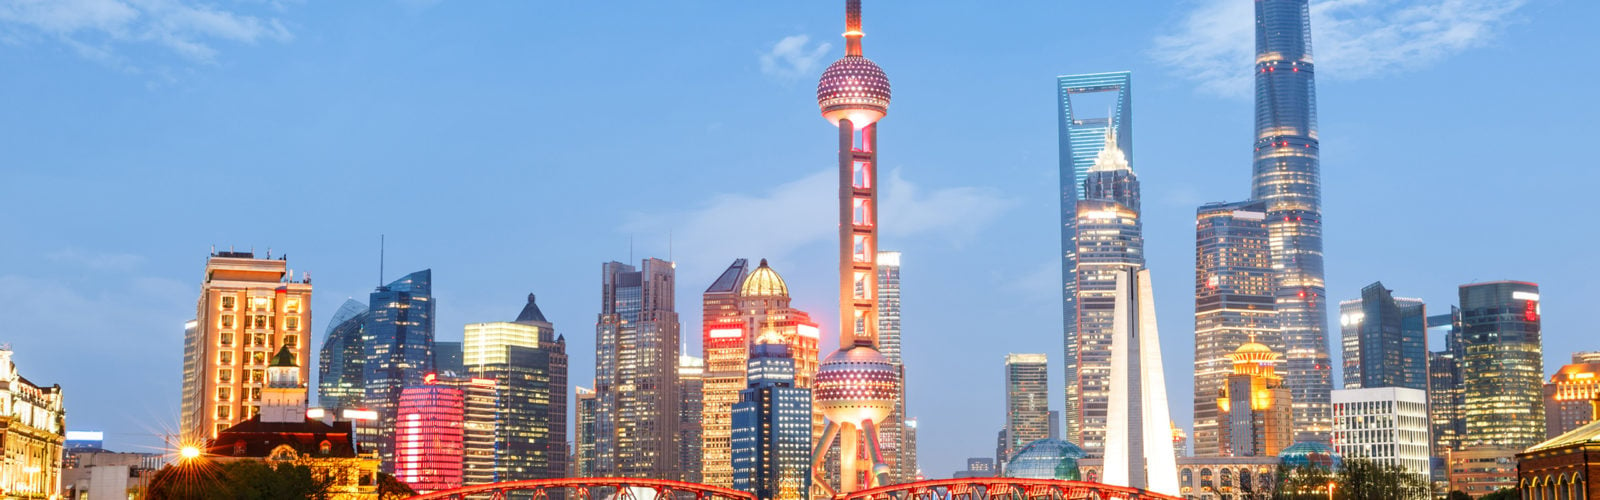 The modern skyline of Shanghai